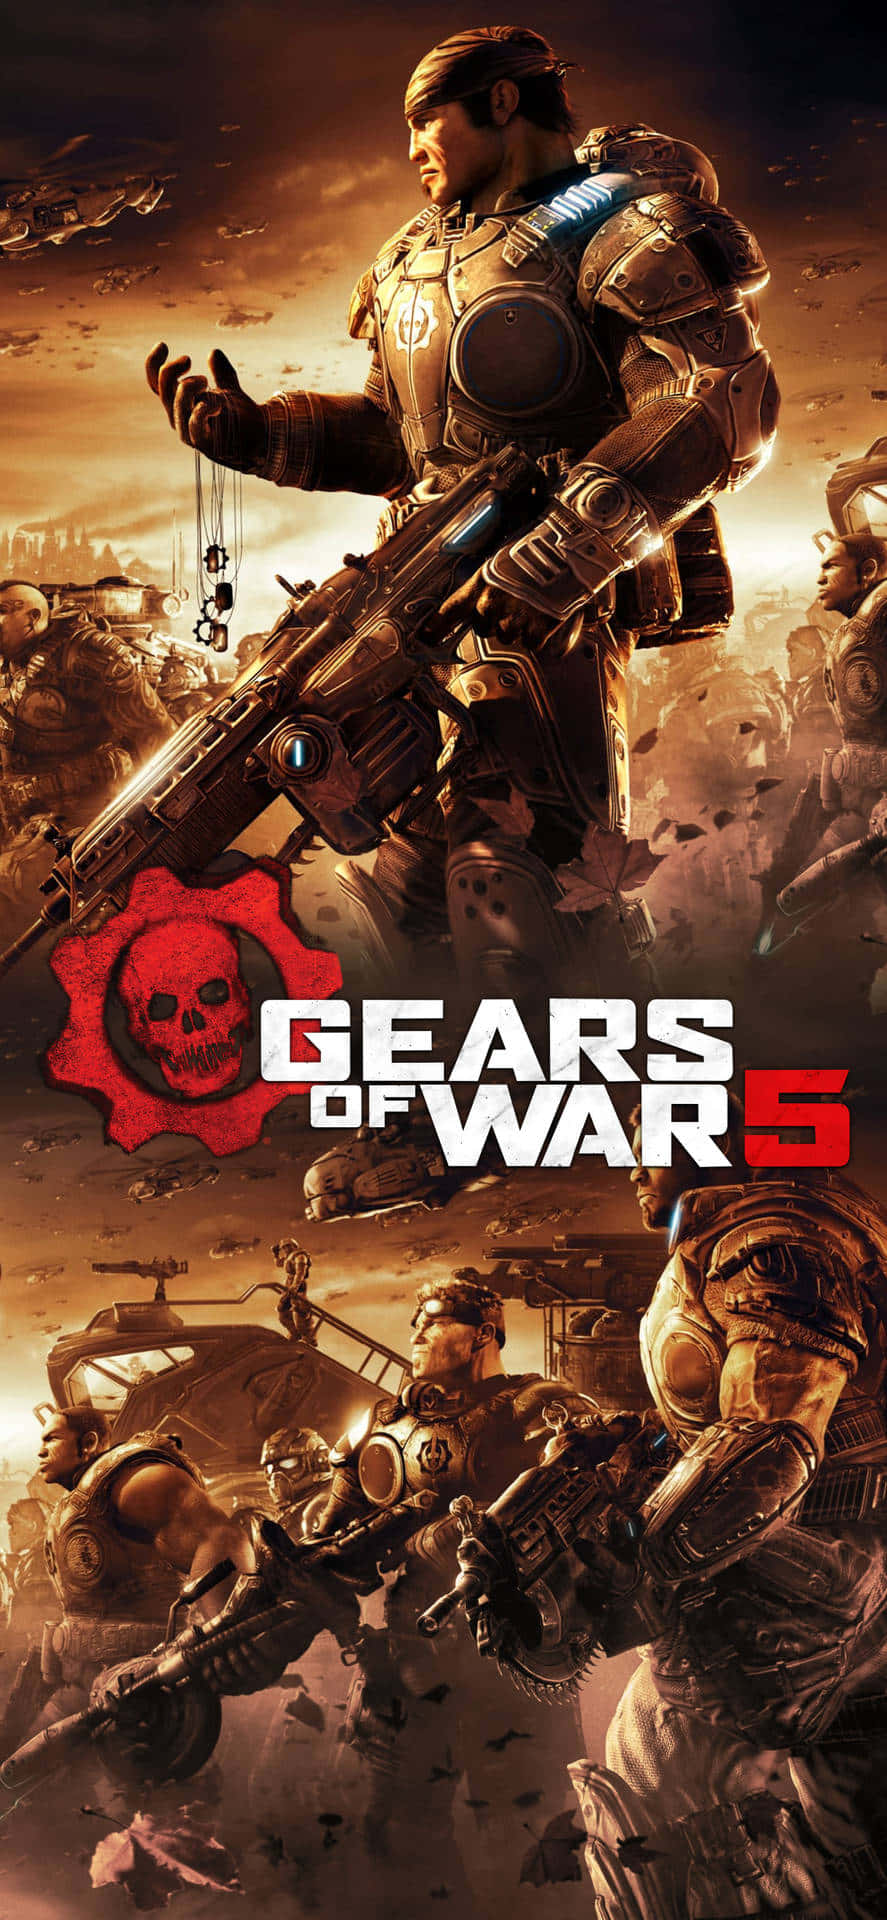 Pósterde Varios Personajes Para Fondo De Pantalla Del Iphone Xs De Gears Of War 5.